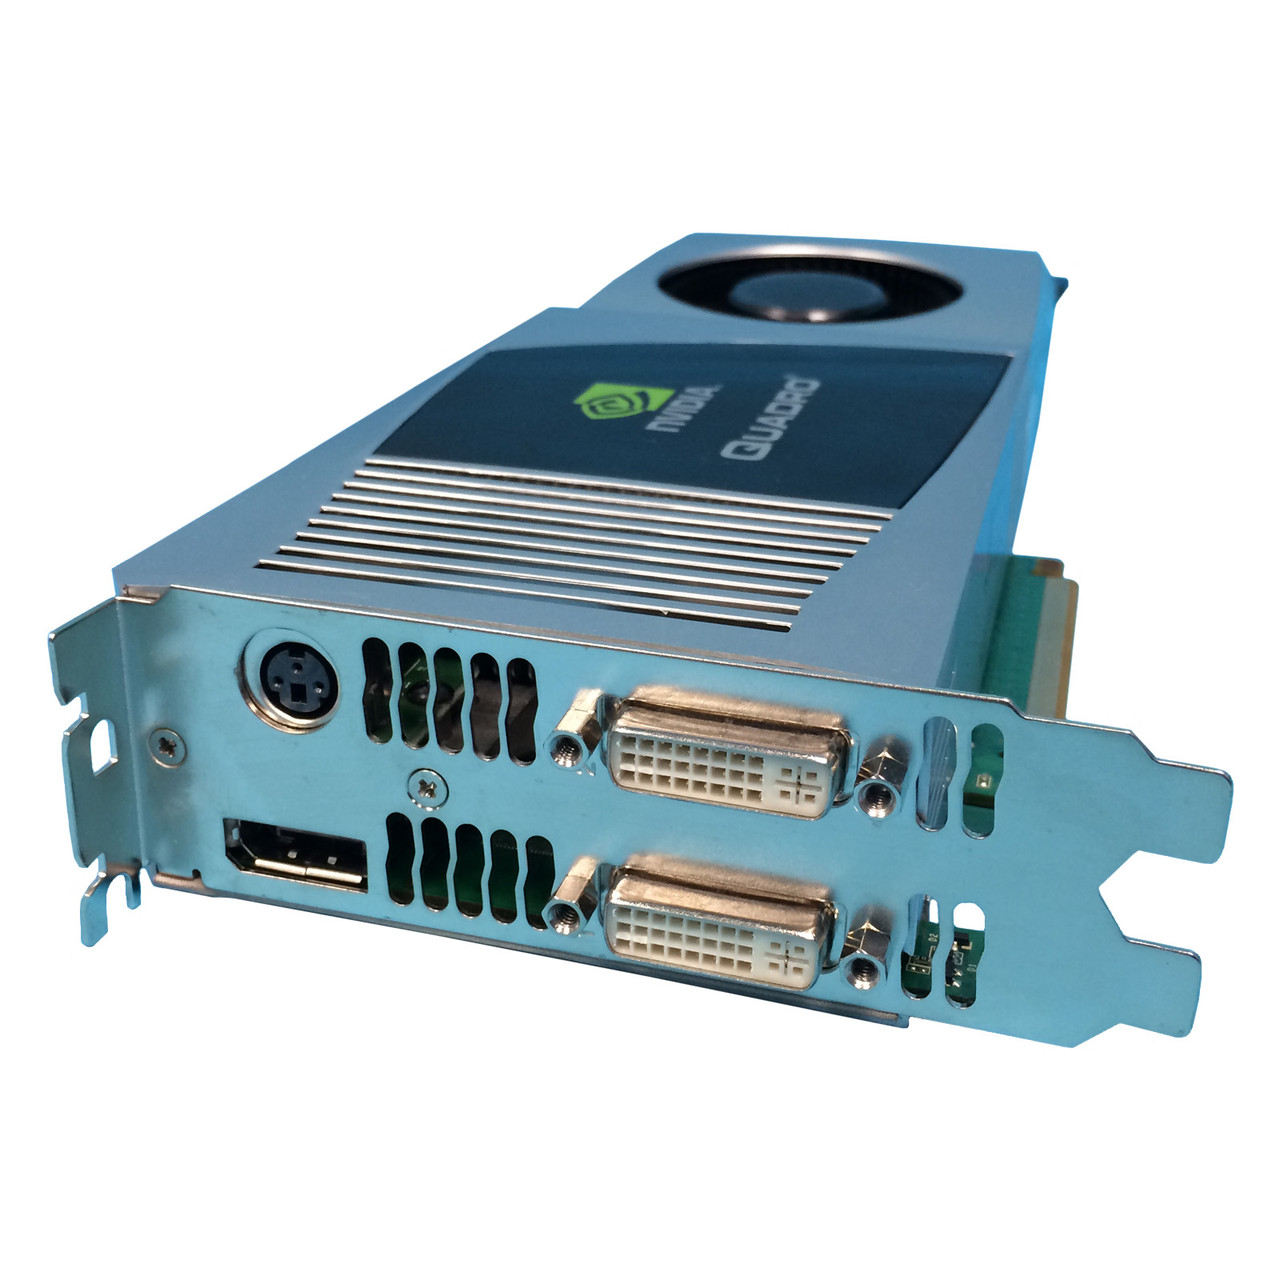 1HKHC NVIDIA Quadro FX5800 w/4GB PCIe x16 Video Card